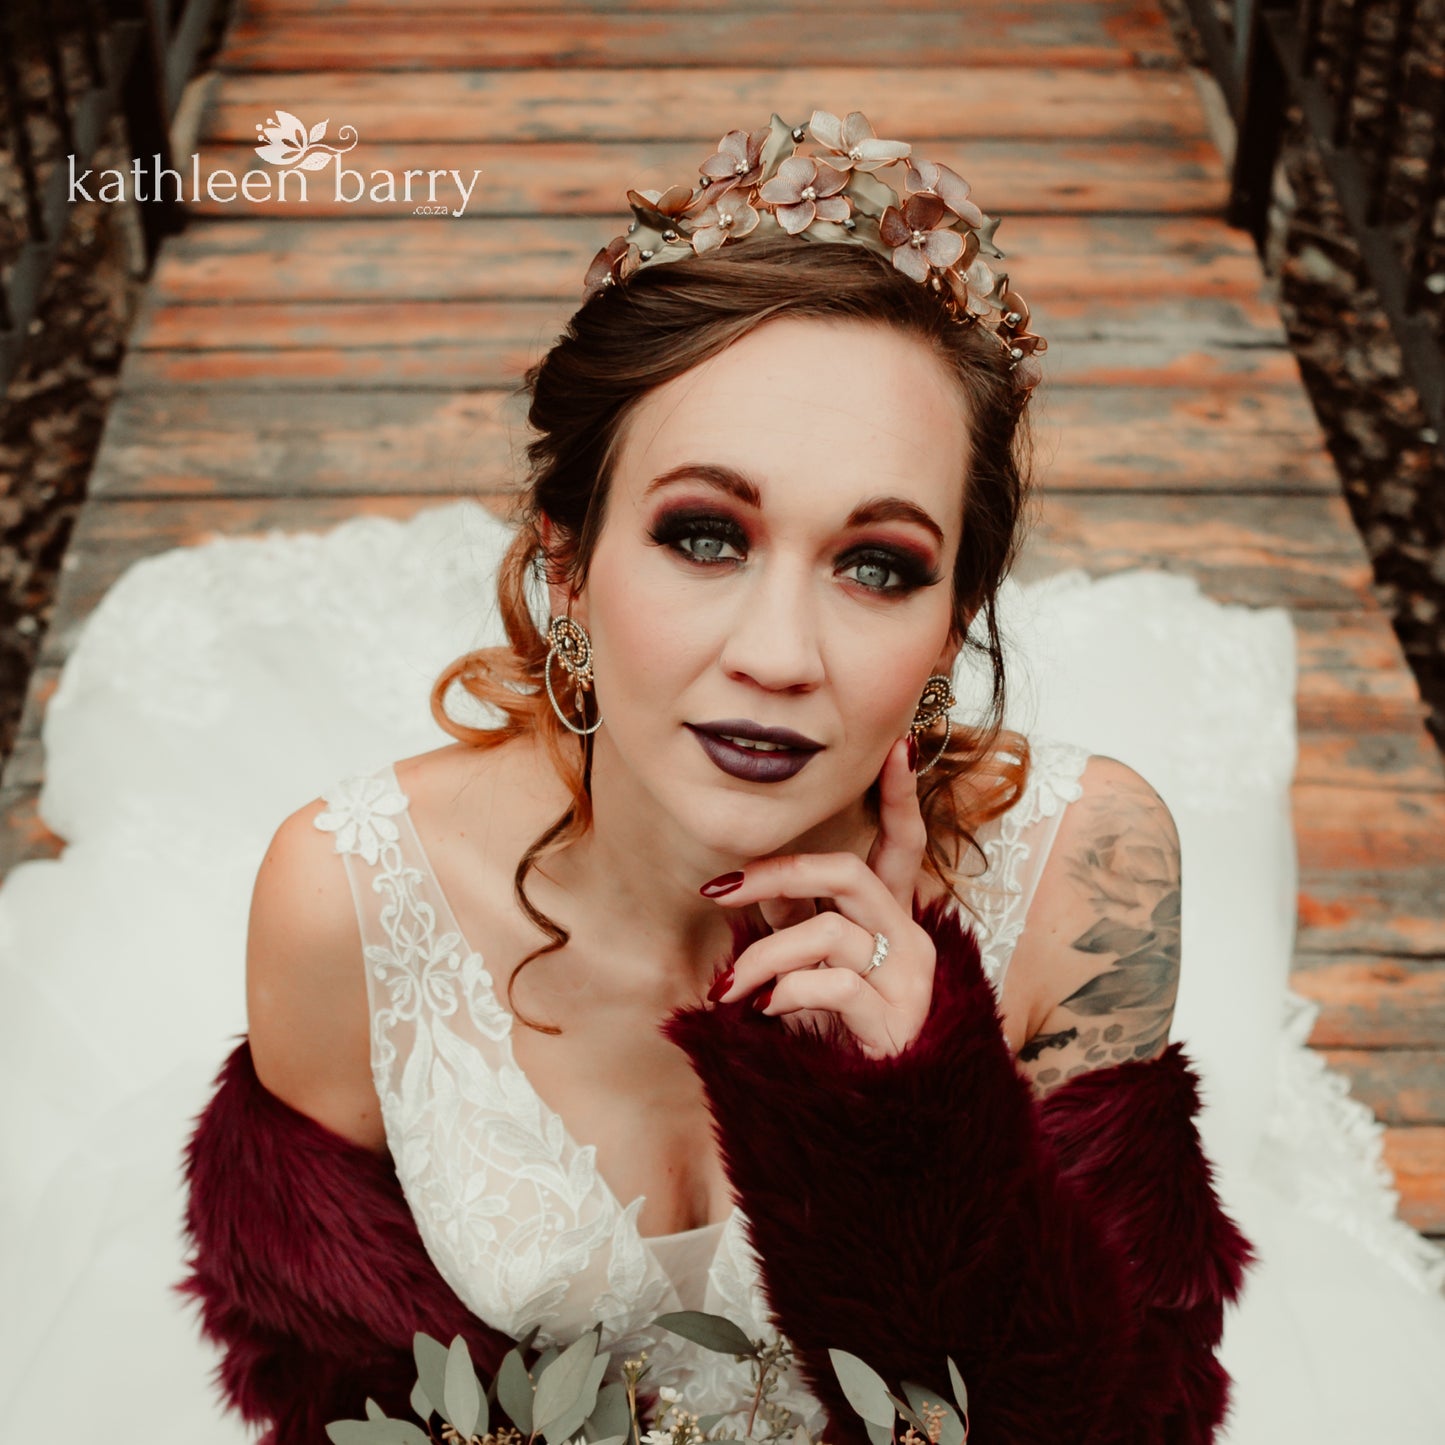 Melinda Muted metallic shade floral tiara style crown - custom colors to order